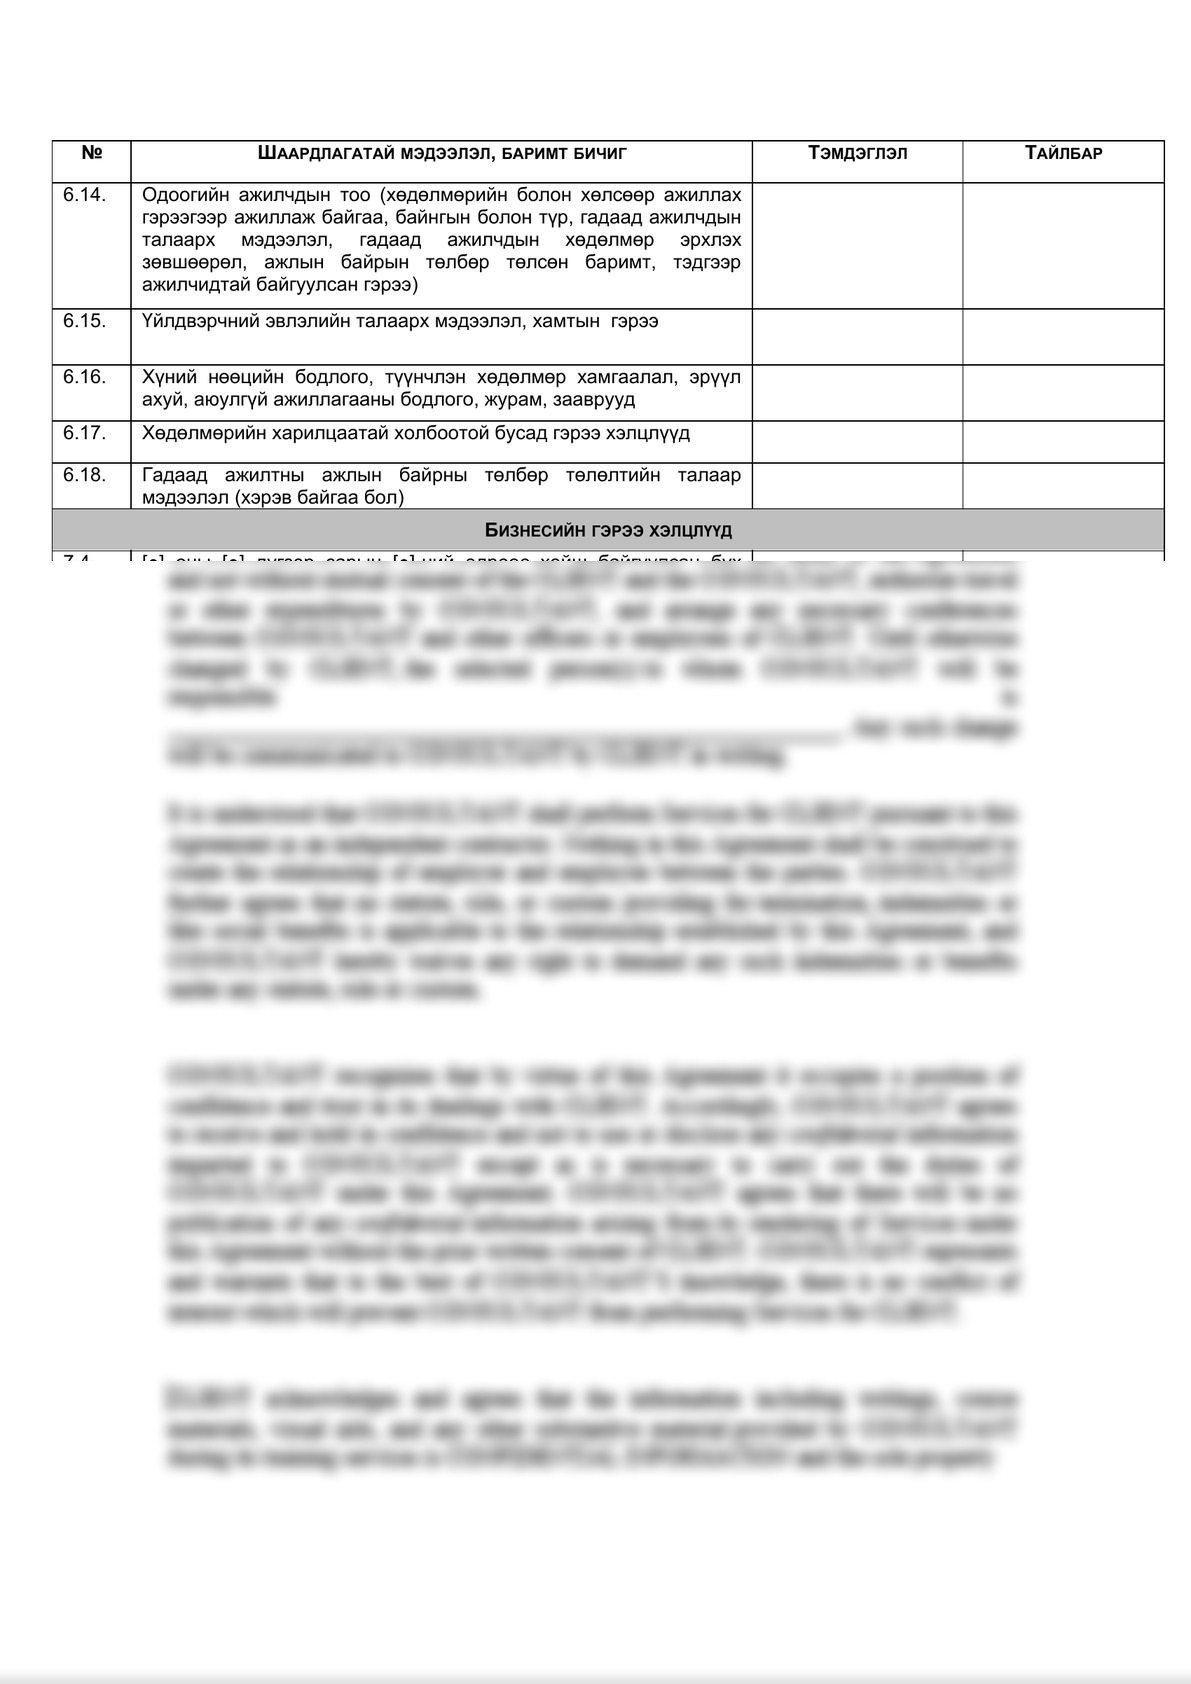 Legal due diligence checklist (Mongolian legal entities)    -9